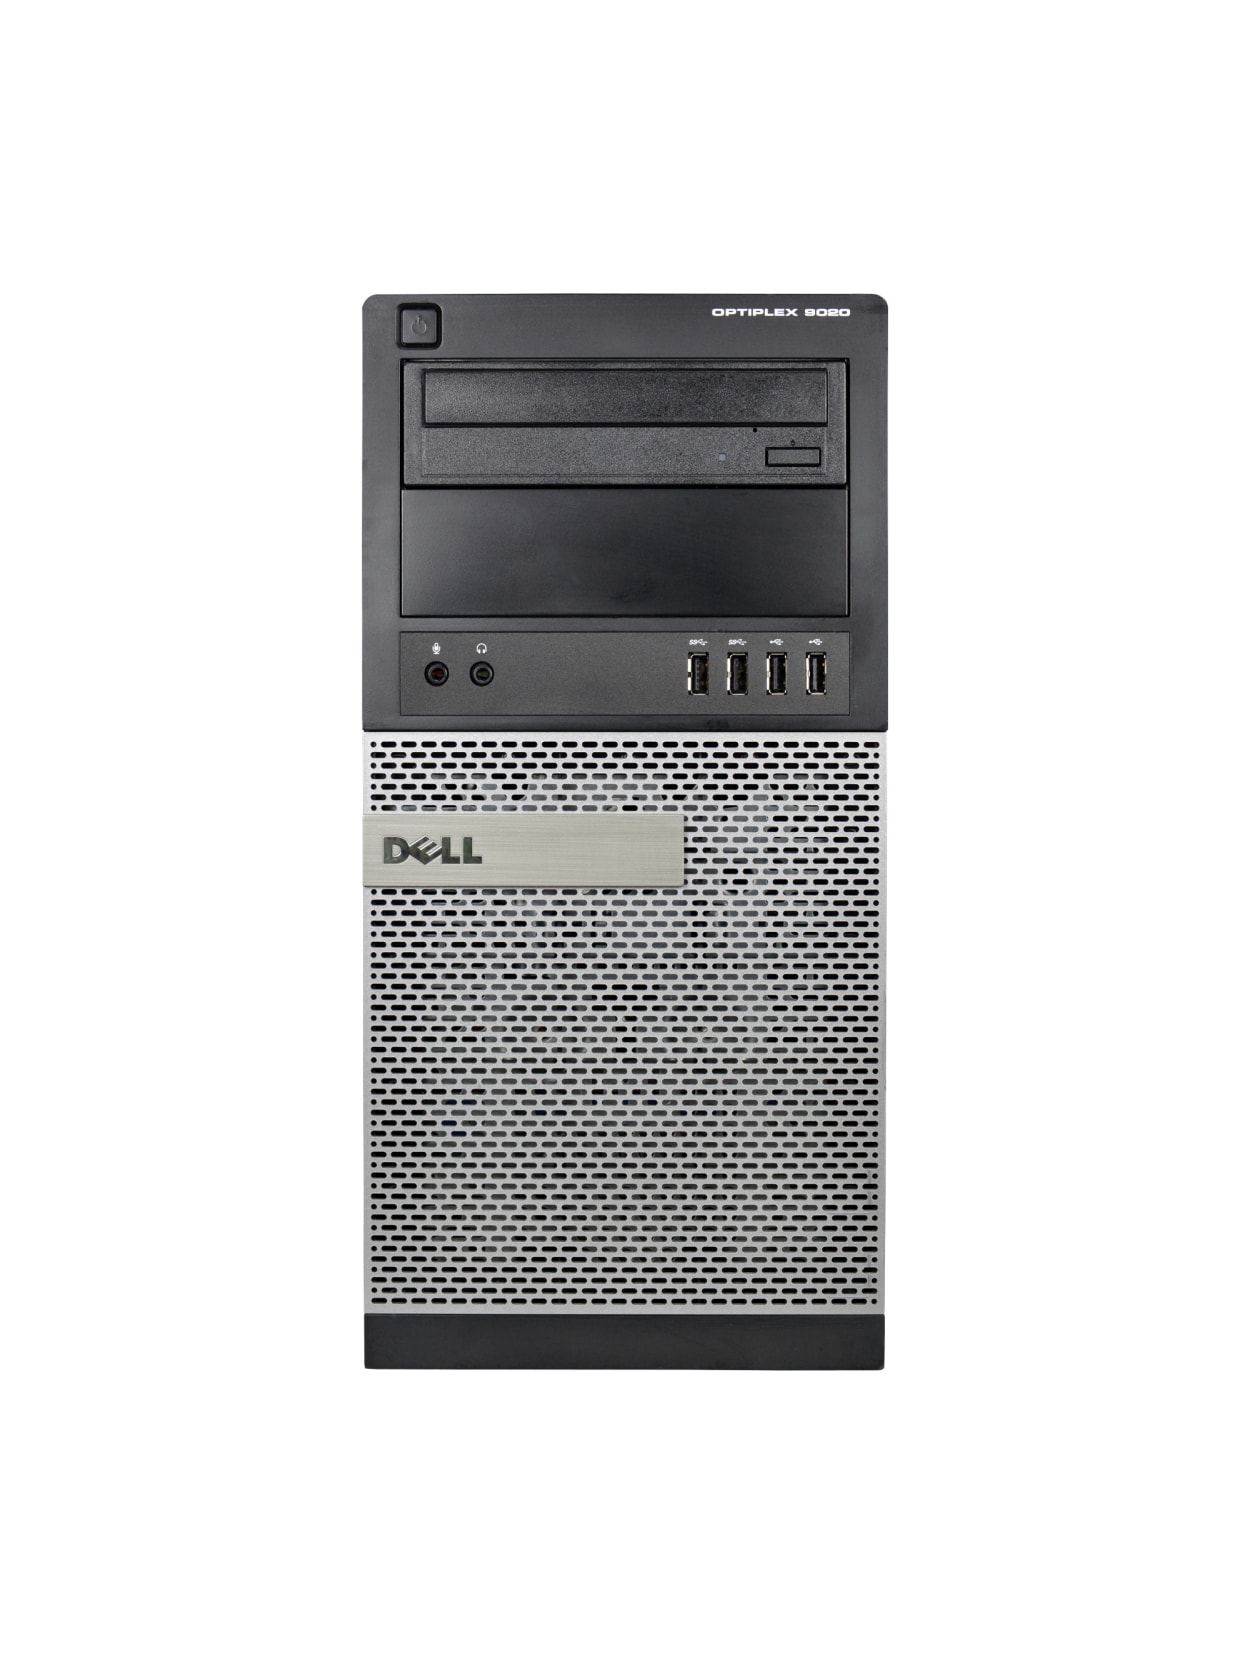 Dell Optiplex 90 Refurbished Desktop Pc Intel Core I7 16gb Memory 2tb Hard Drive Windows 10 Pro Office Depot